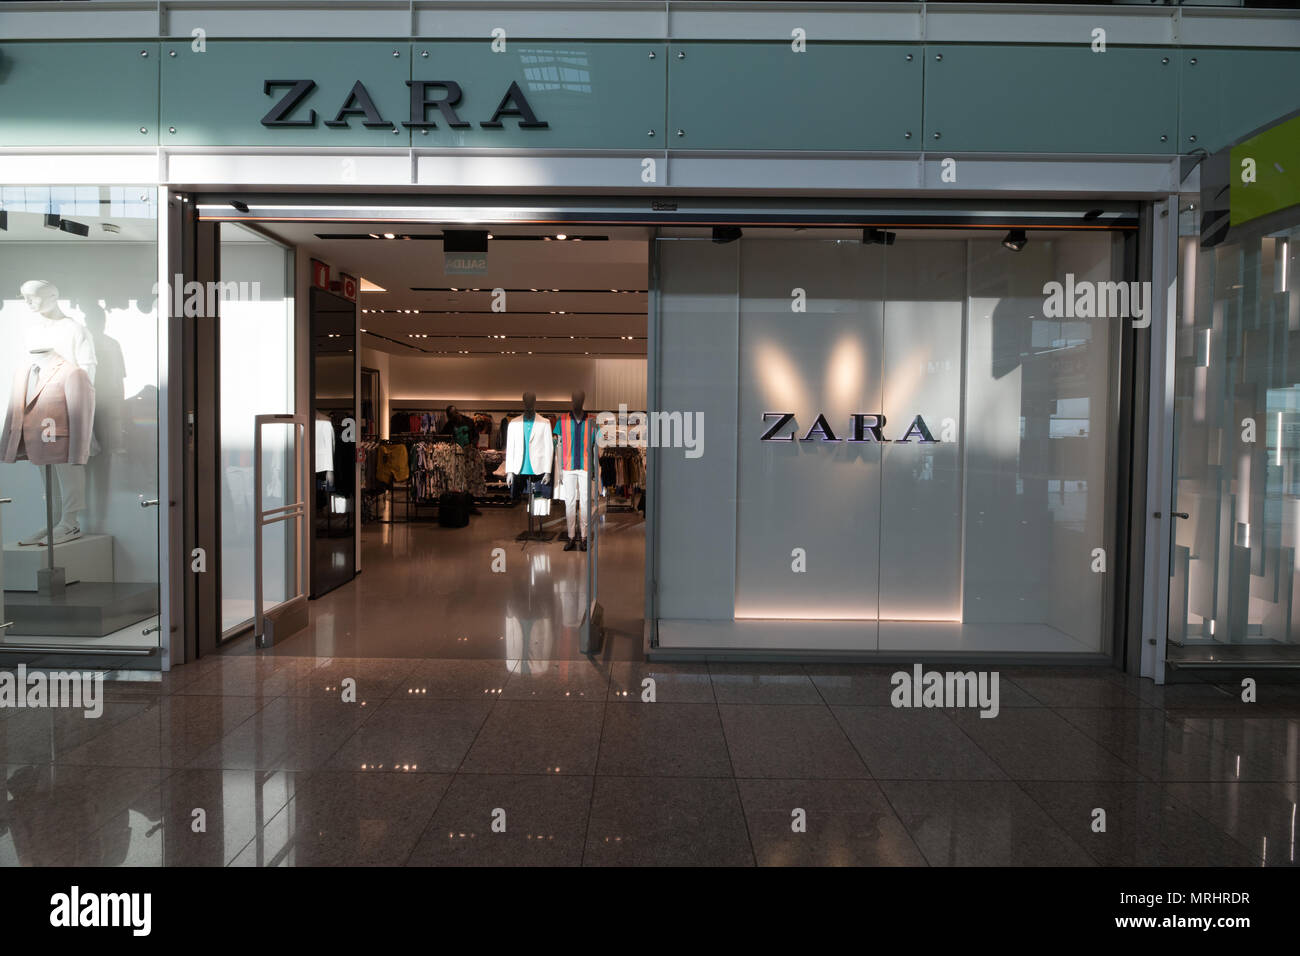 Barcelona airport, Spain ZARA store business Stock Photo - Alamy